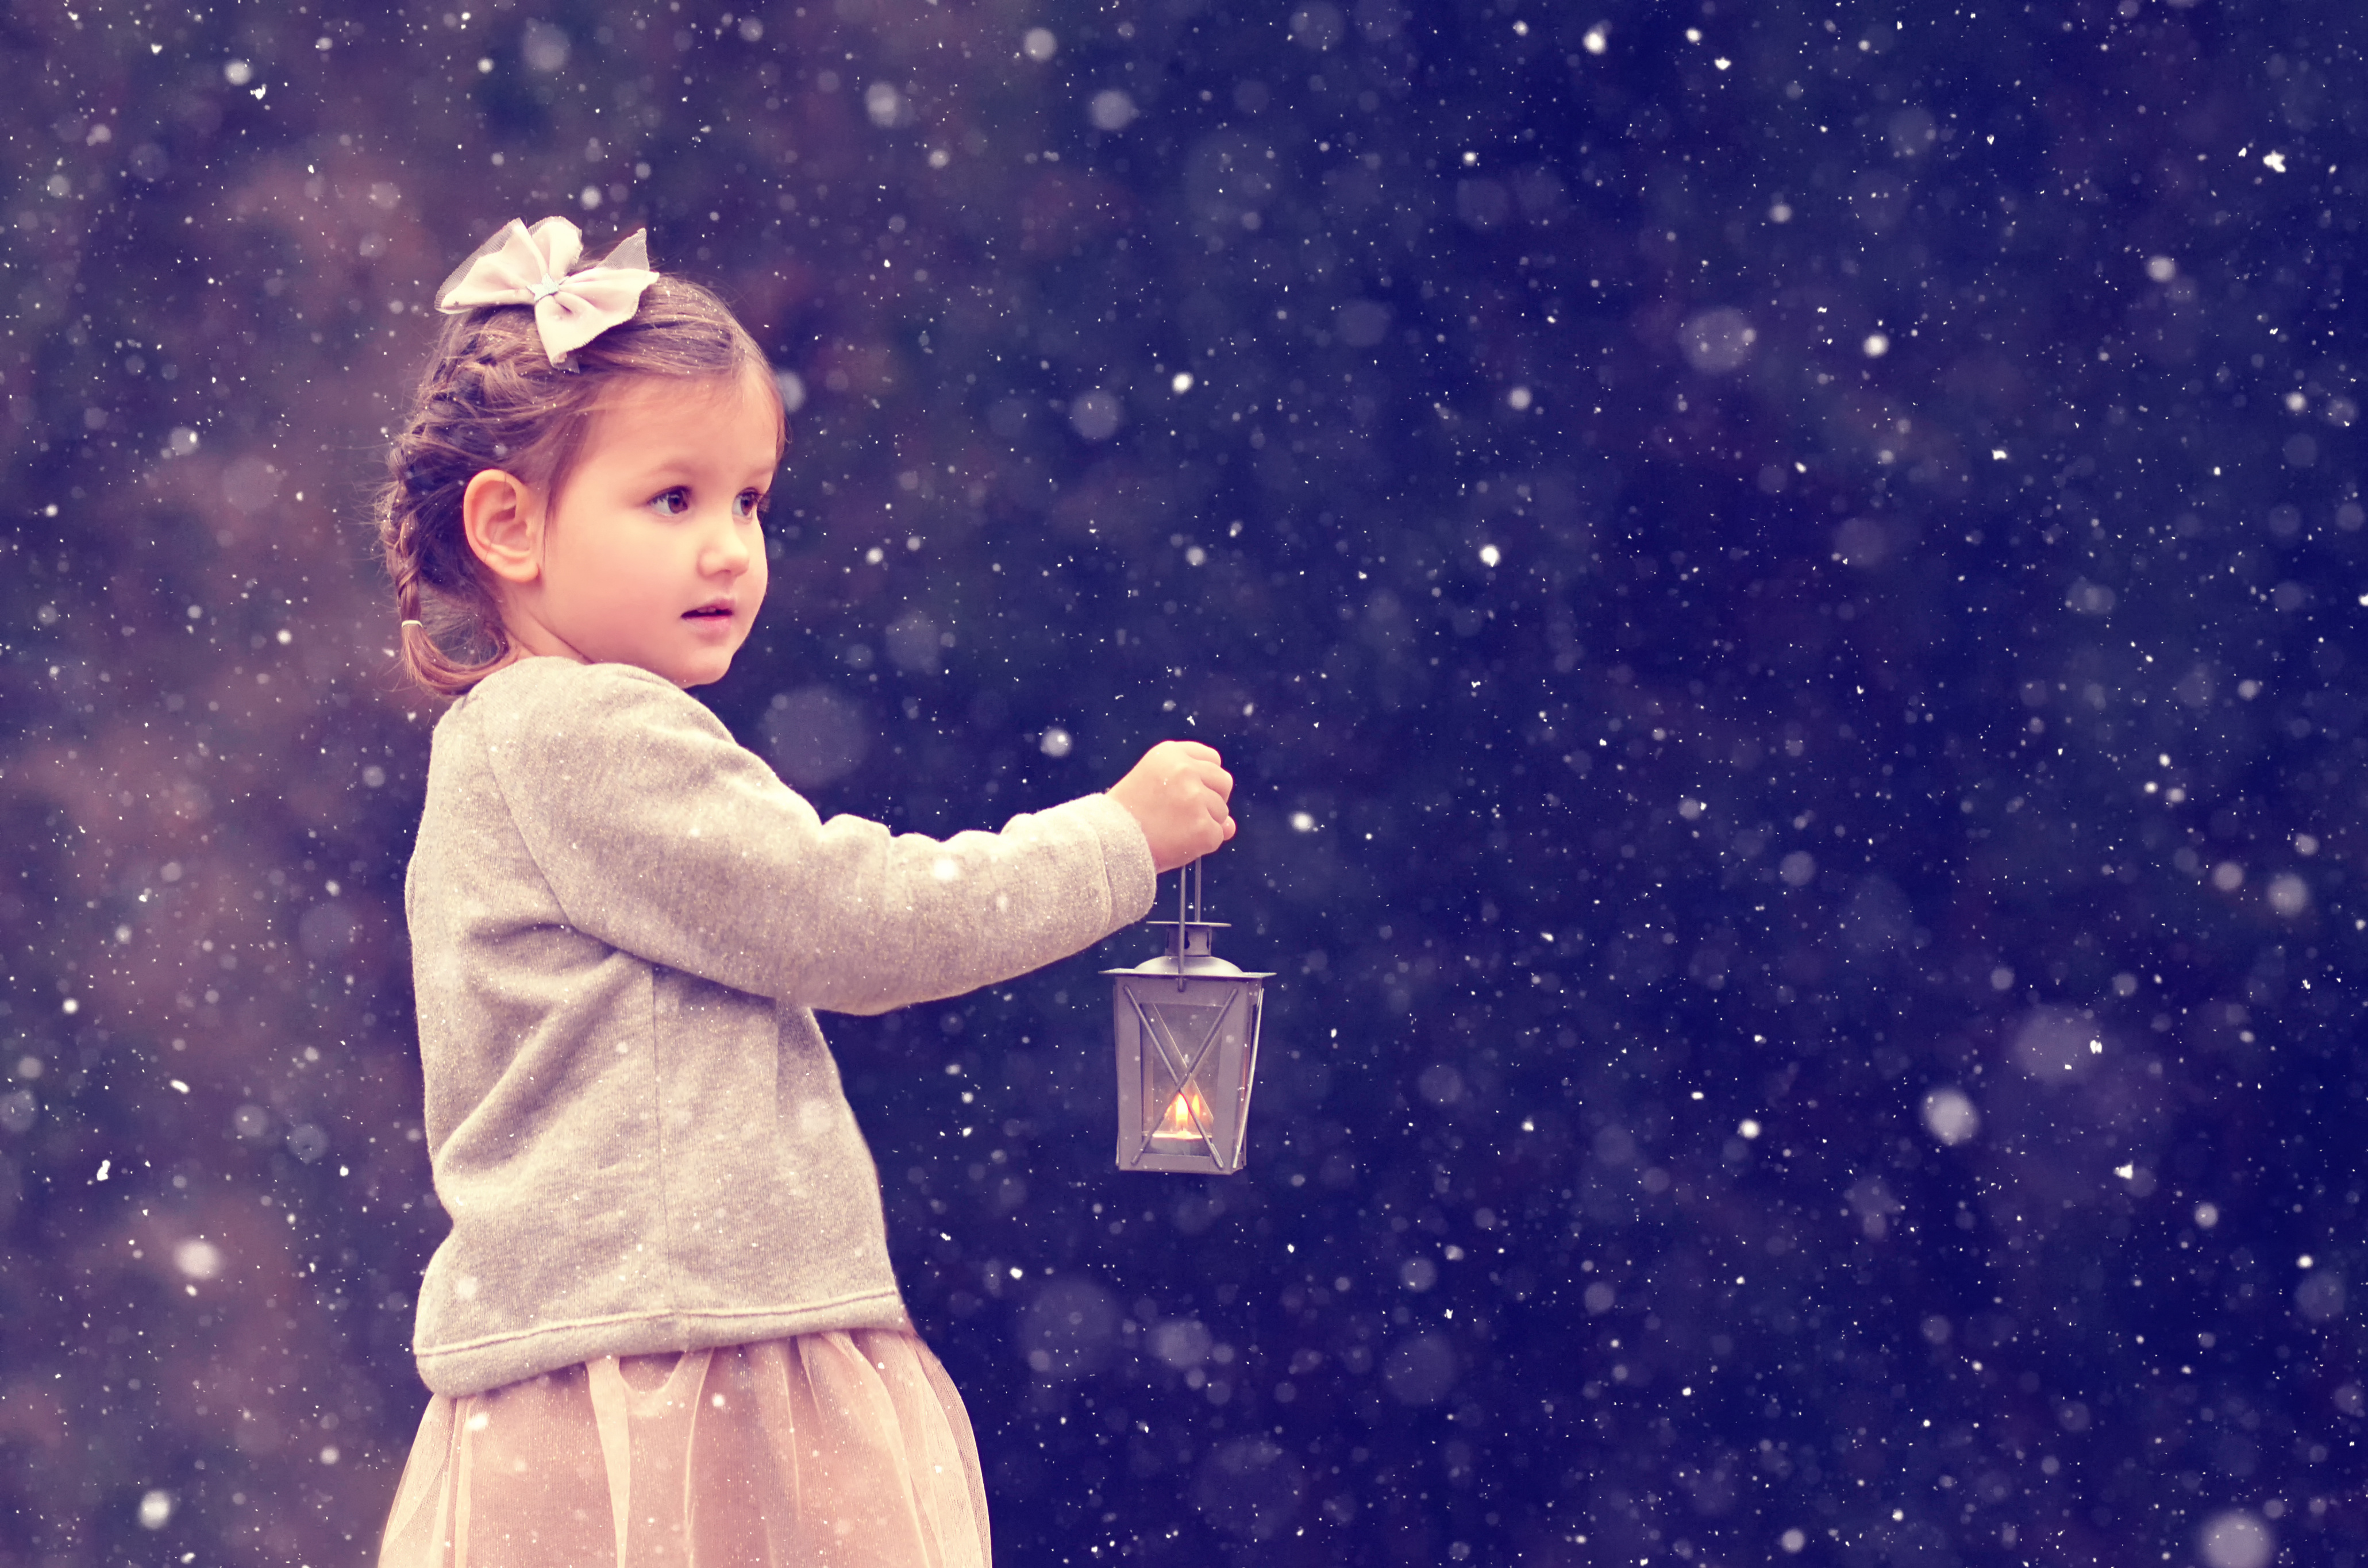 Wallpaper. Children. photo. picture. girl, flashlight, snow, bow